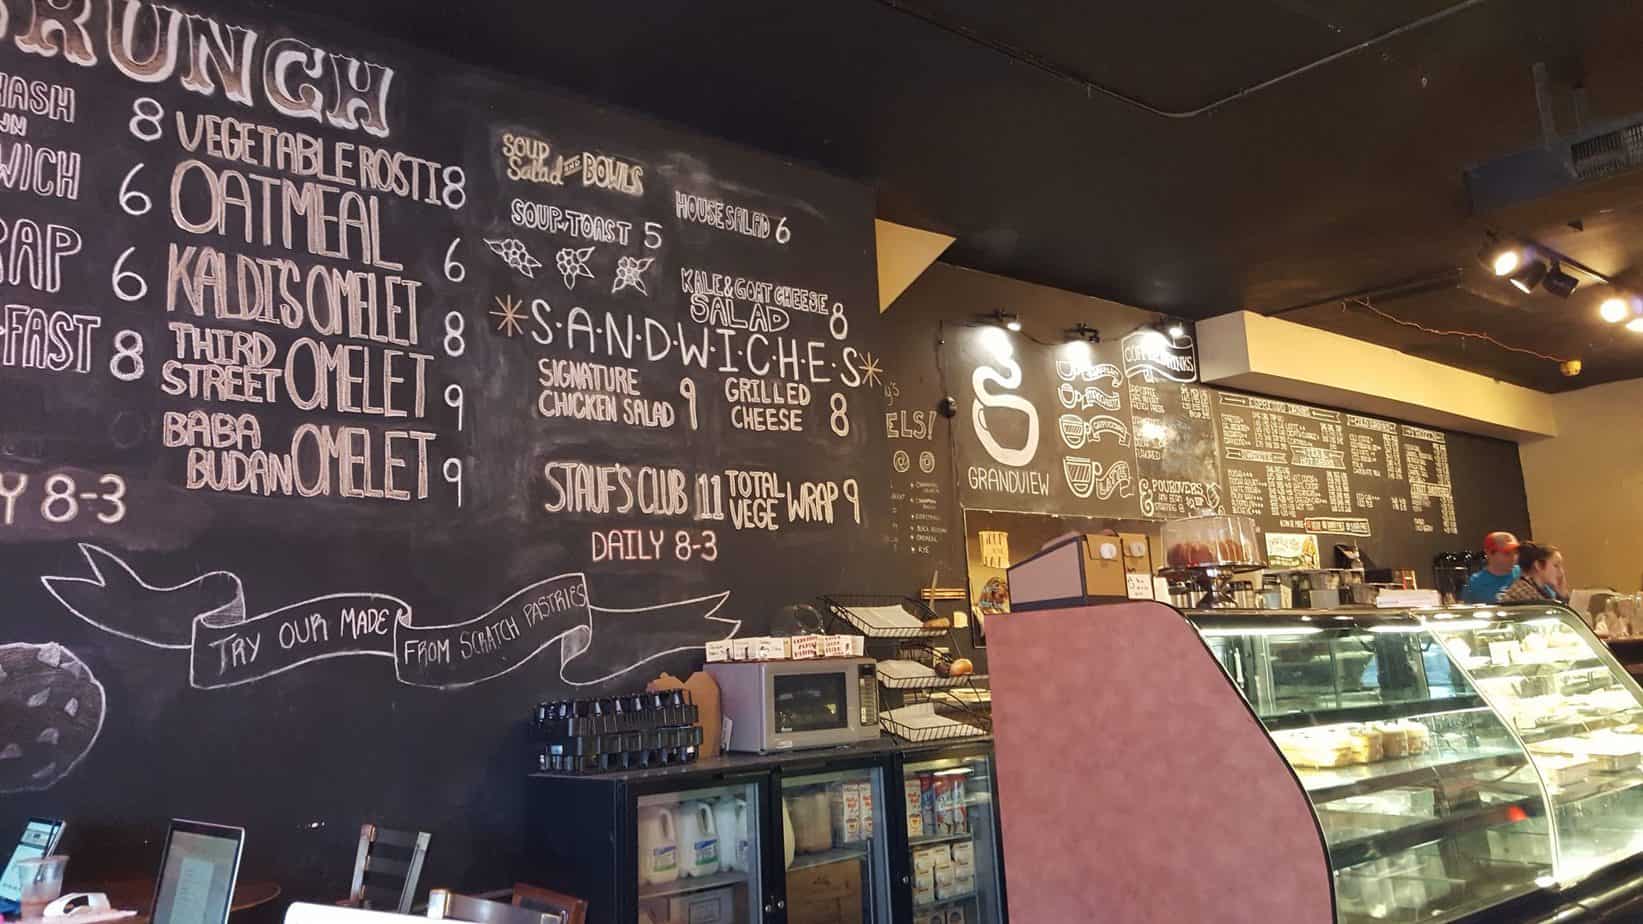 A chalkboard wall with a menu on it.